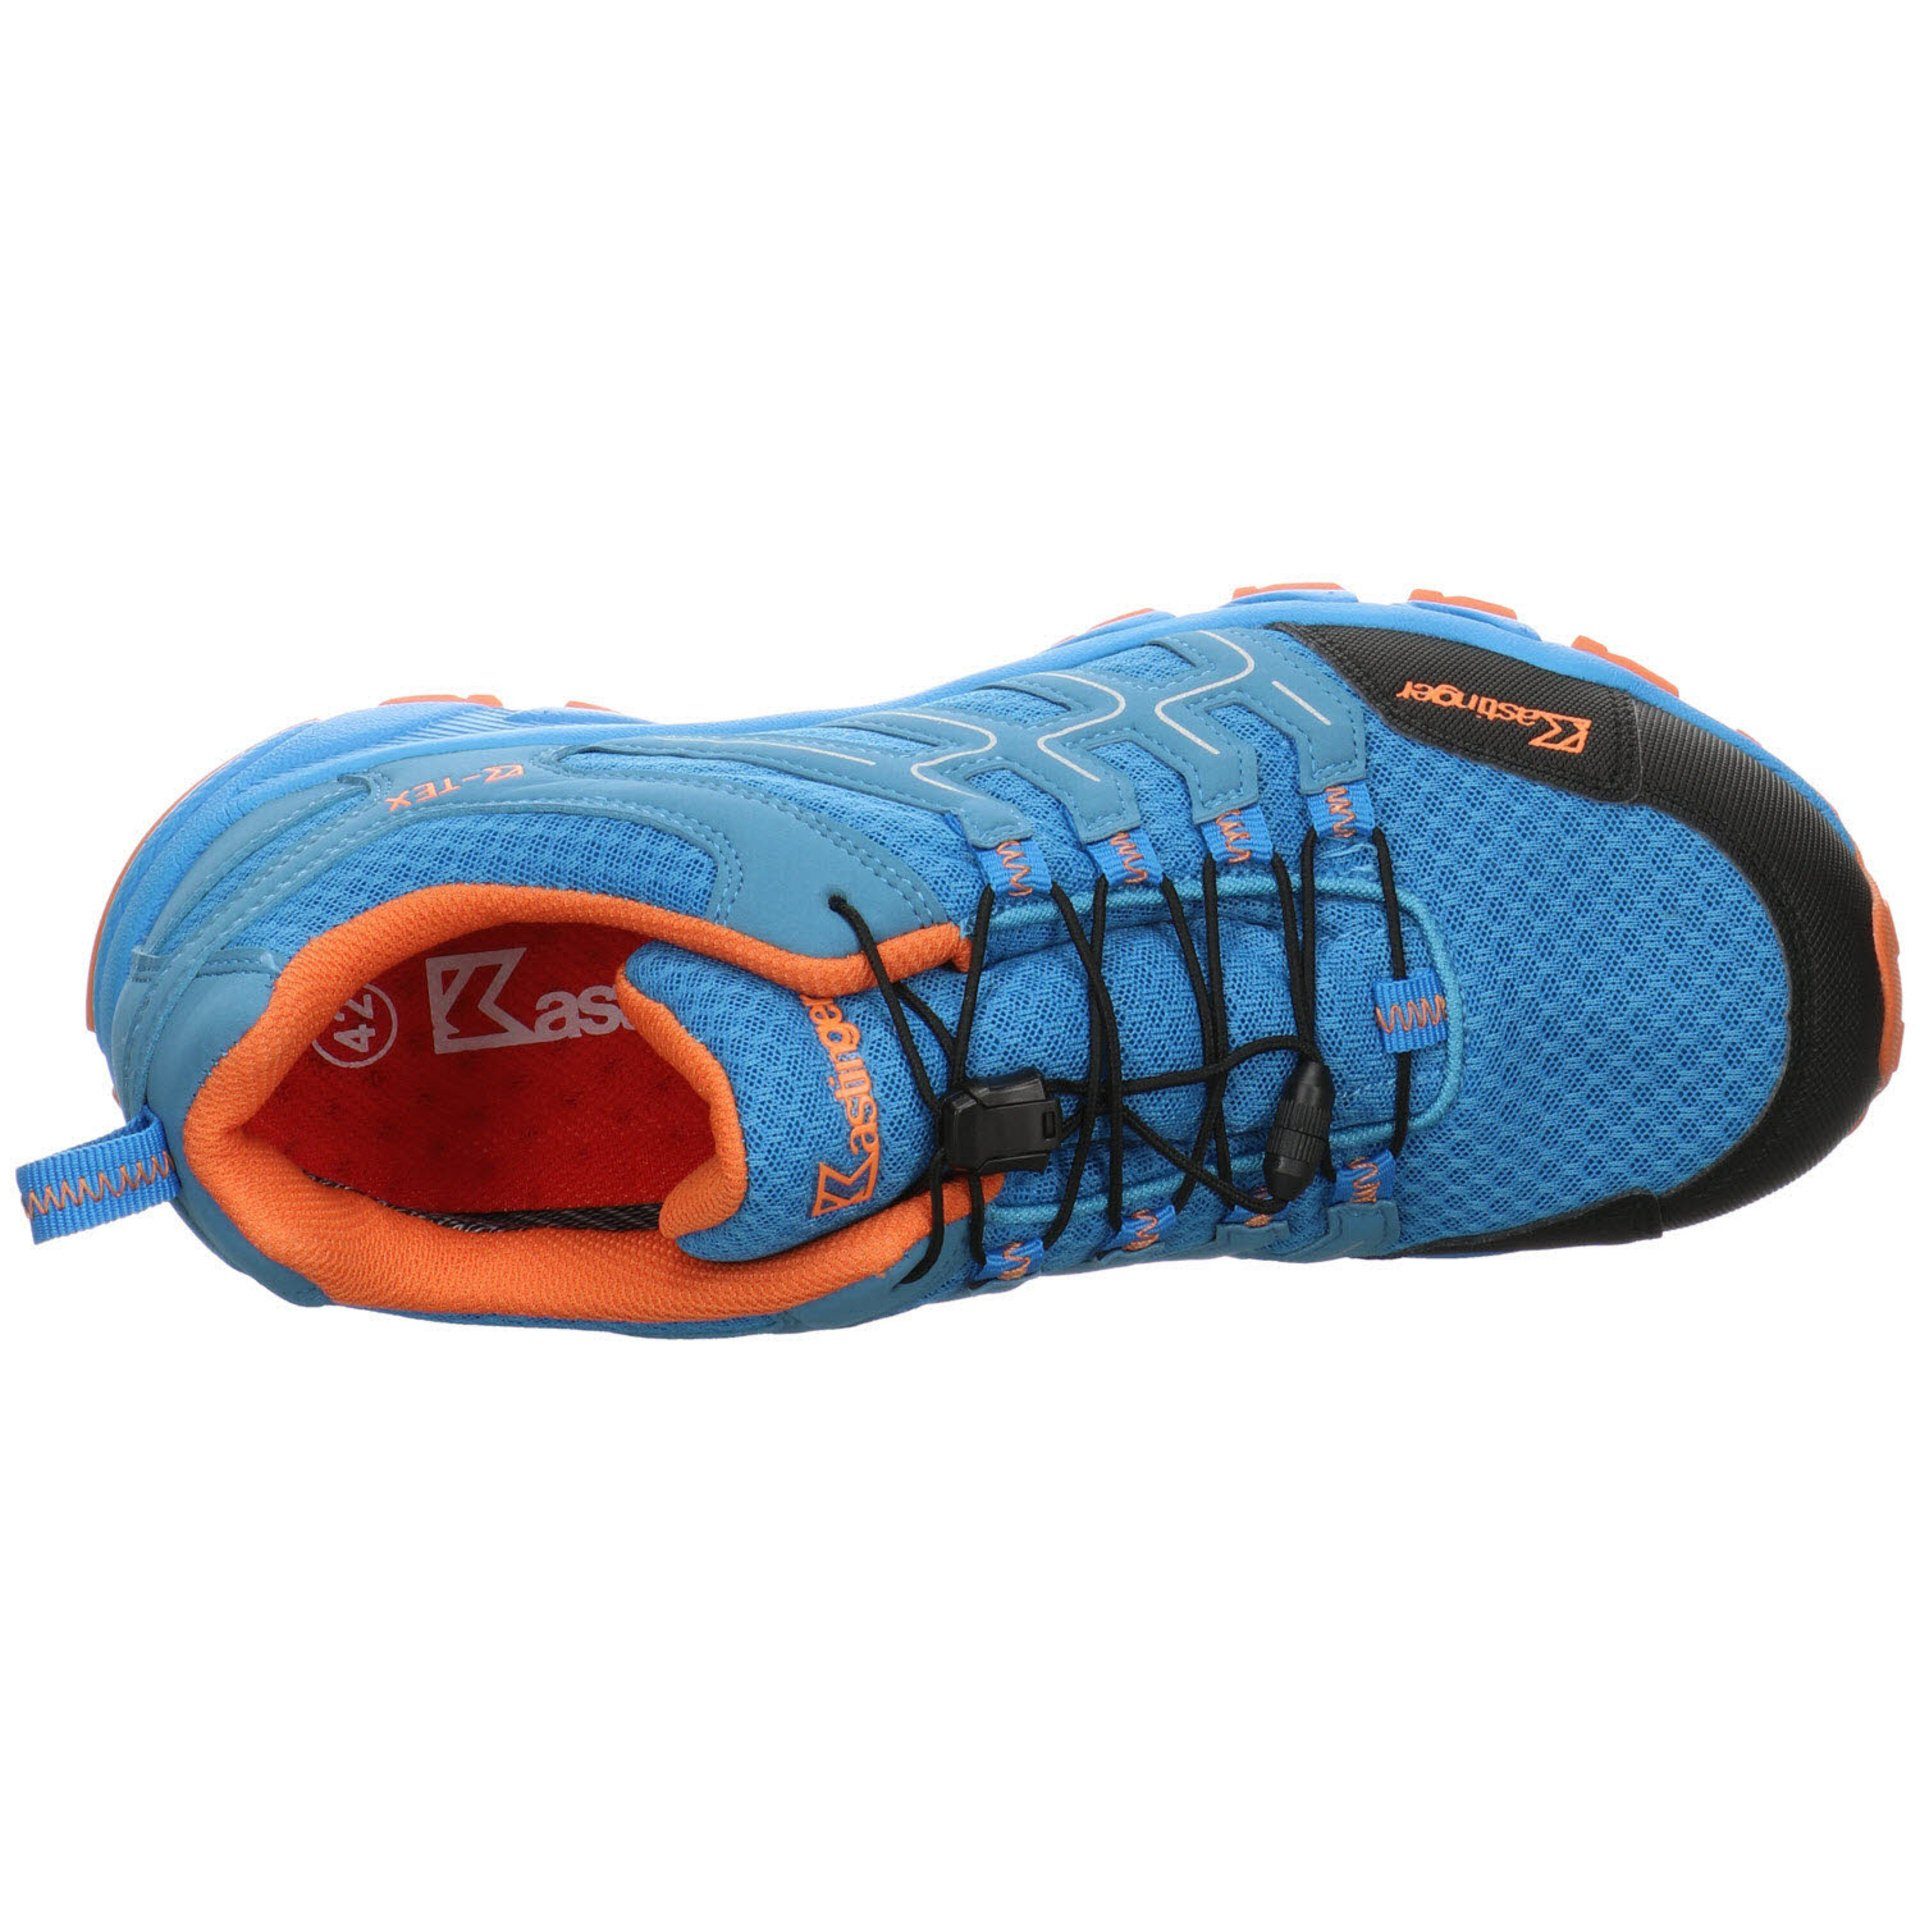 Synthetikkombination blue/orange Outdoorschuh Damen Trailrunner Kastinger Outdoorschuh Outdoor Schuhe